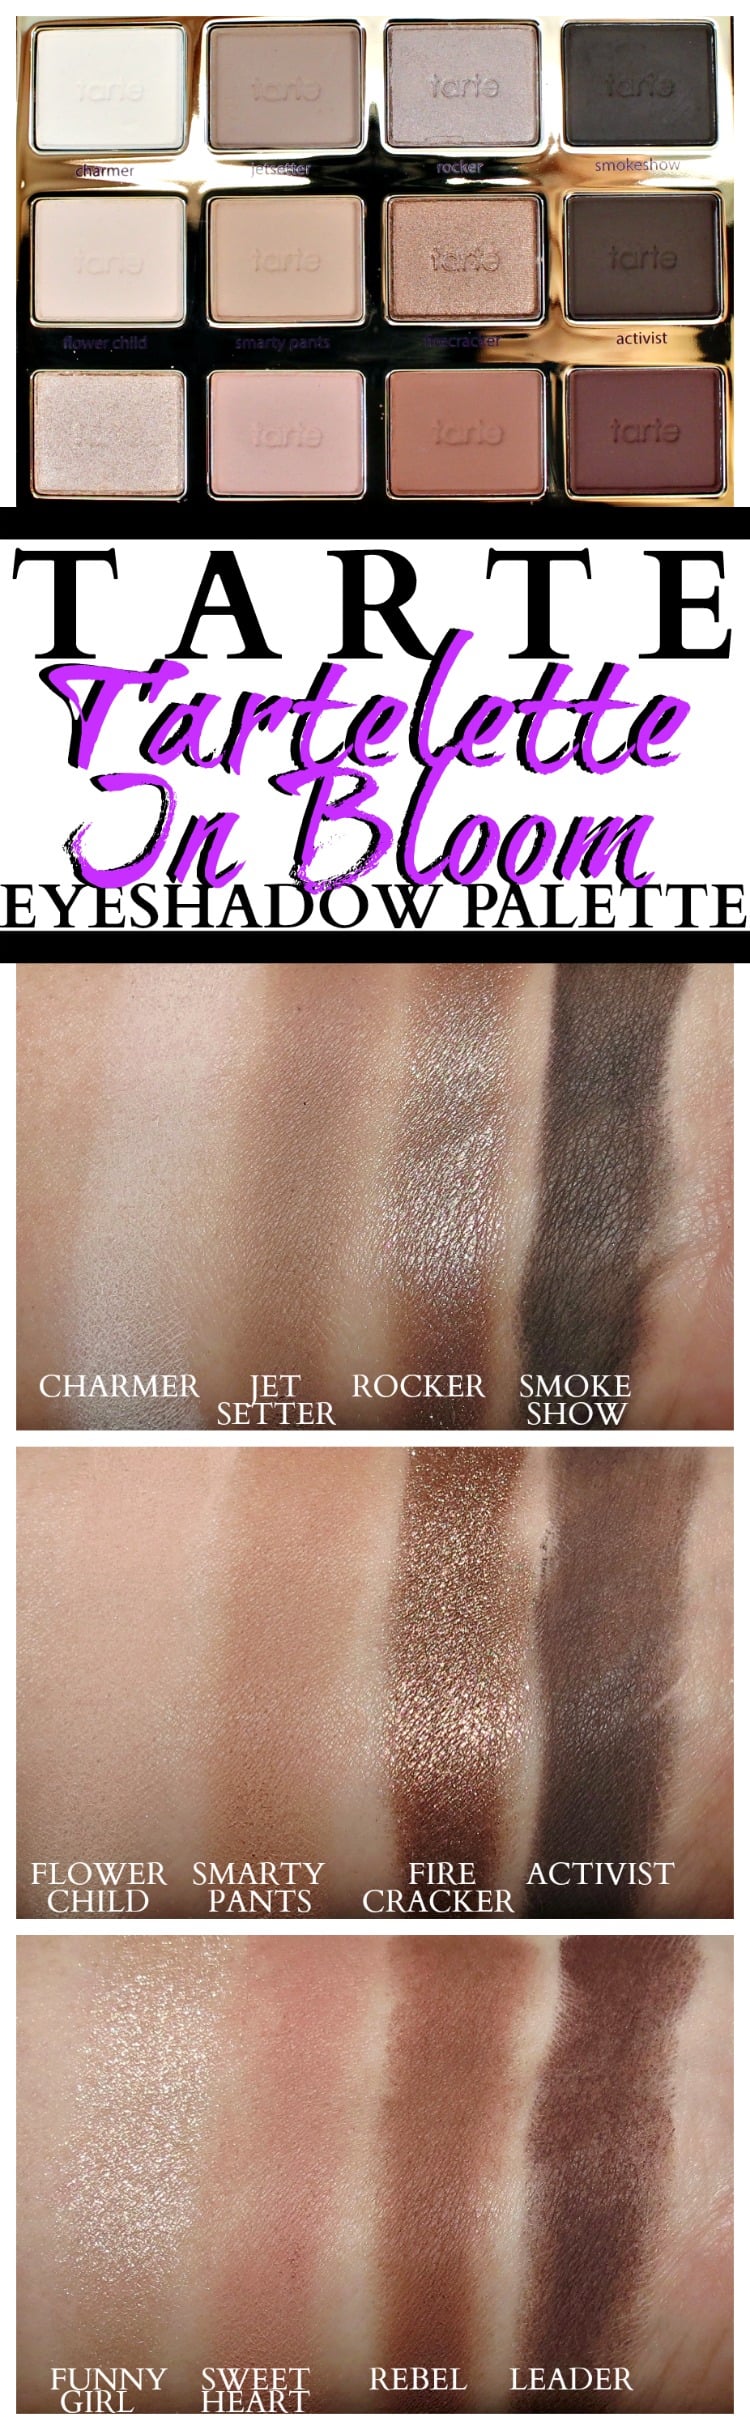 TARTE Tartelette in bloom eyeshadow palette swatches review photos neutral eyeshadow palettes